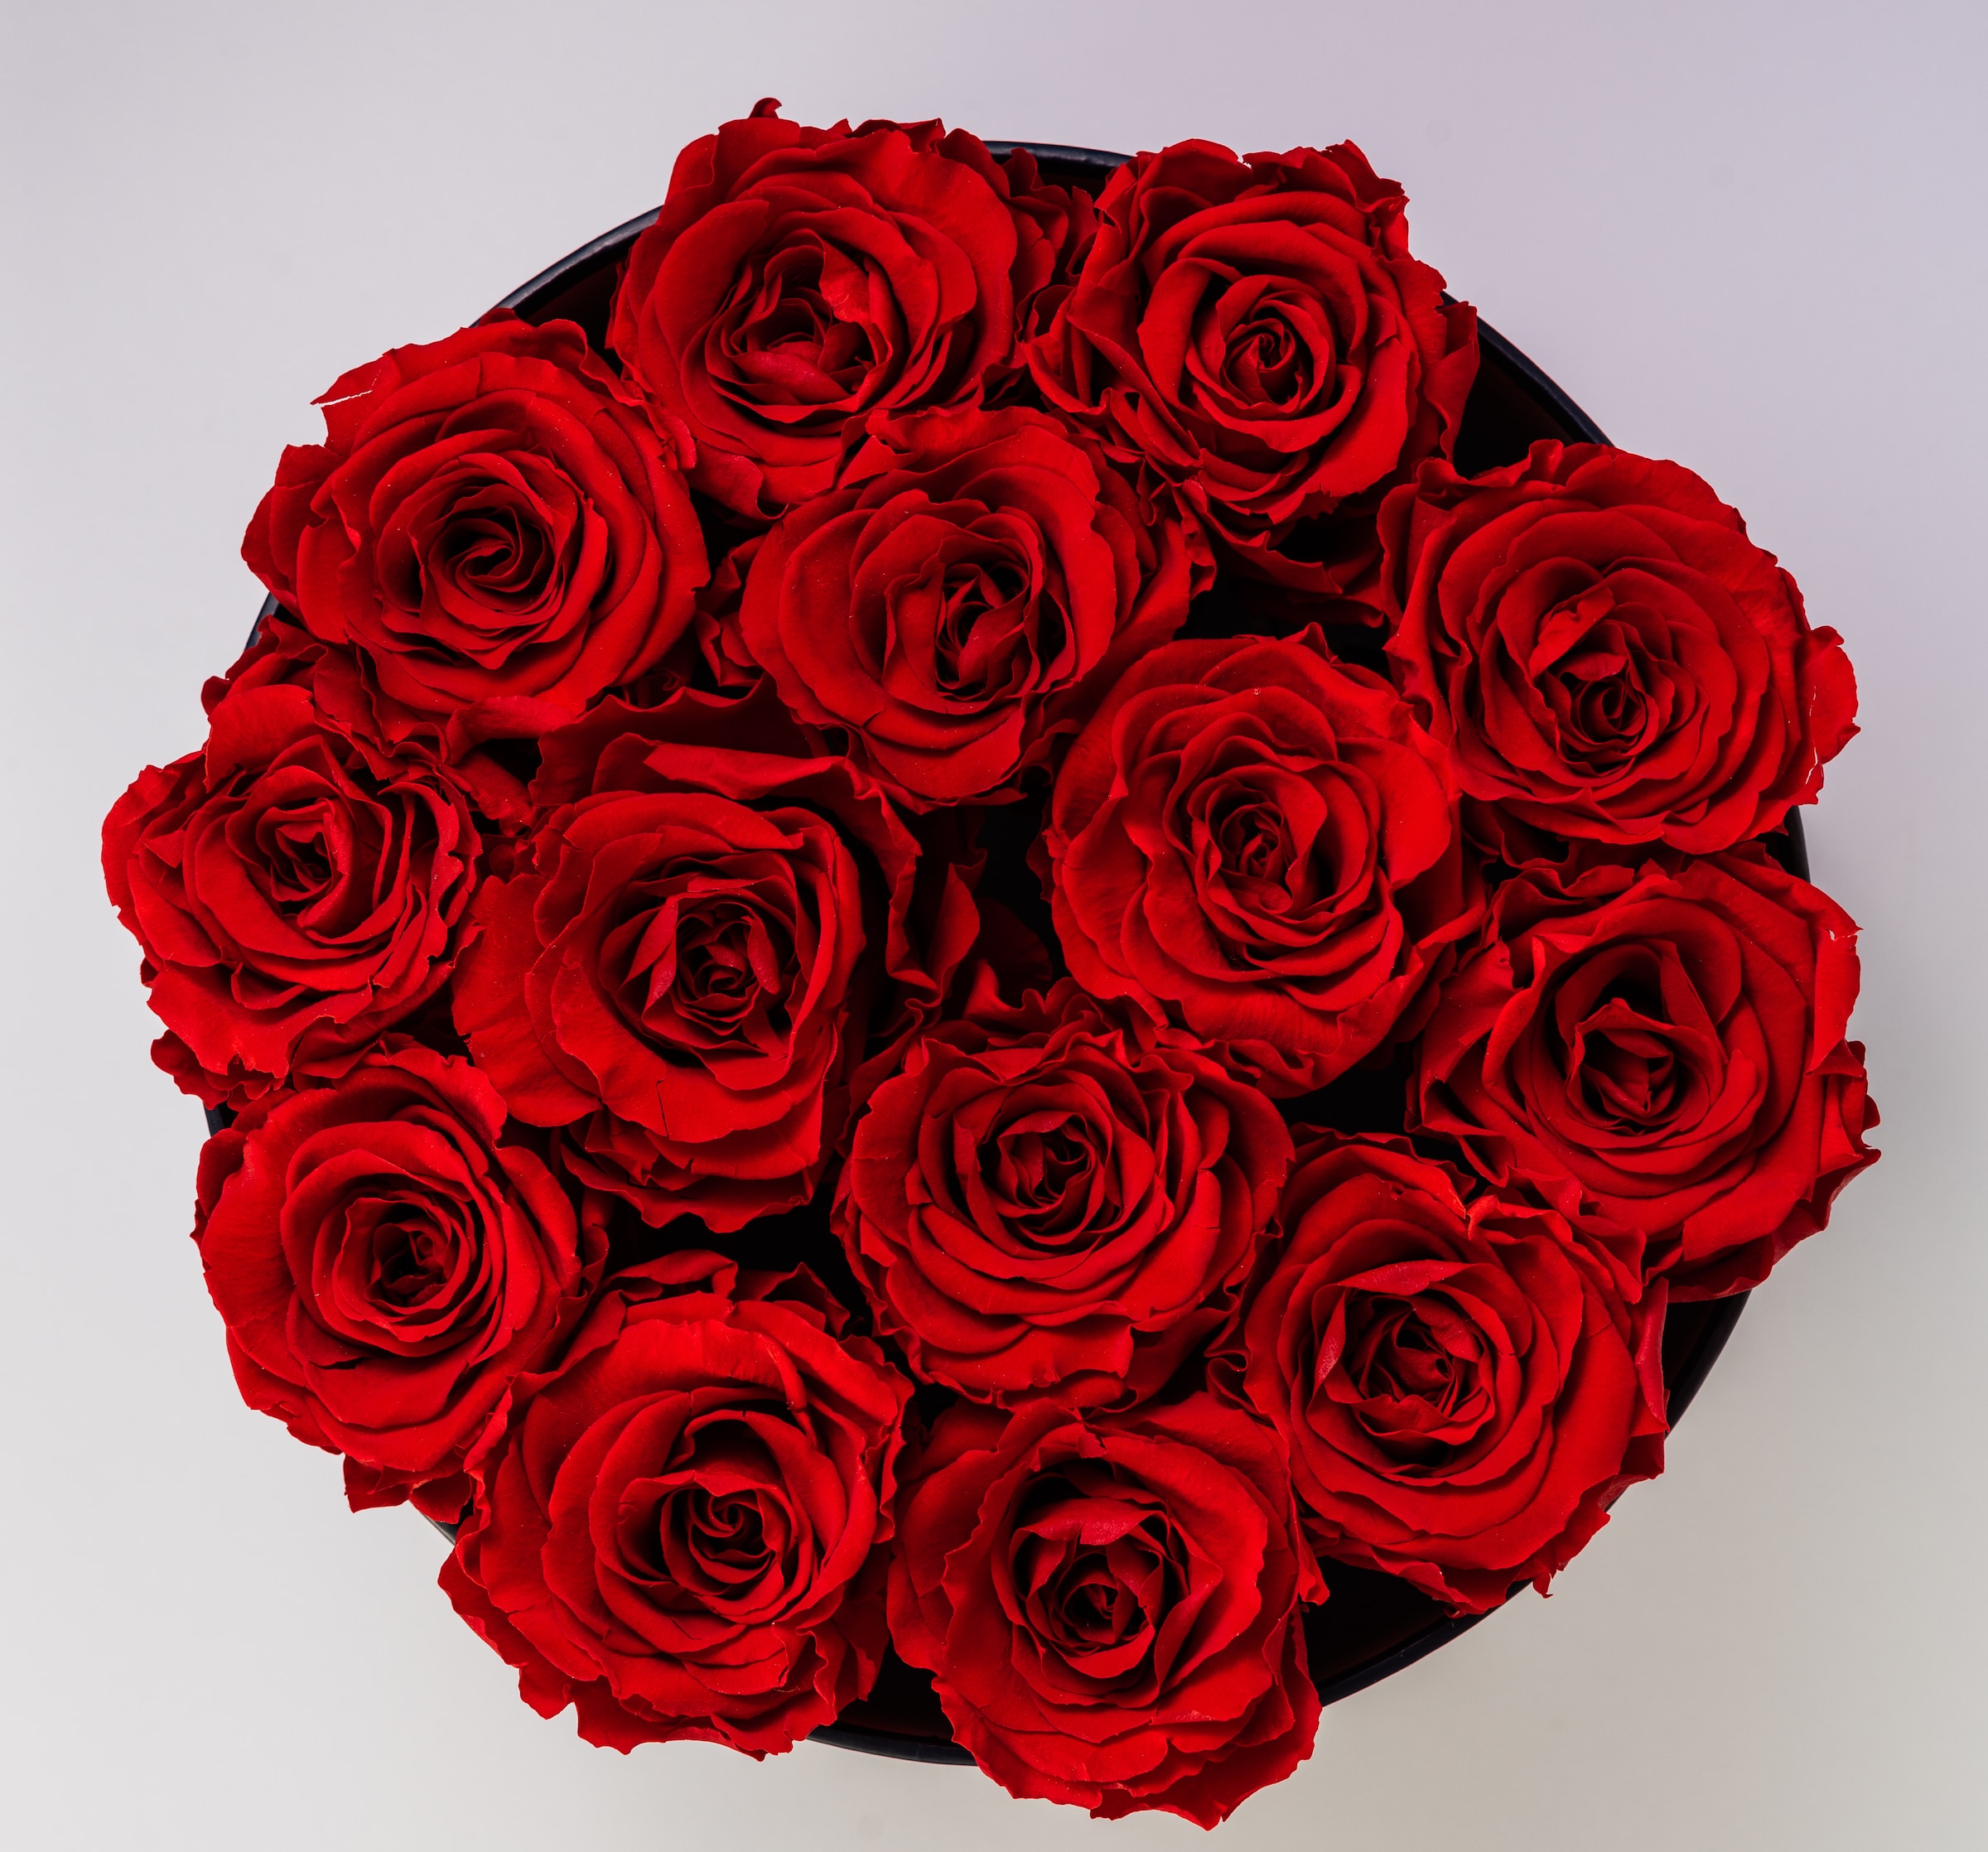 Red roses | Source: Unsplash